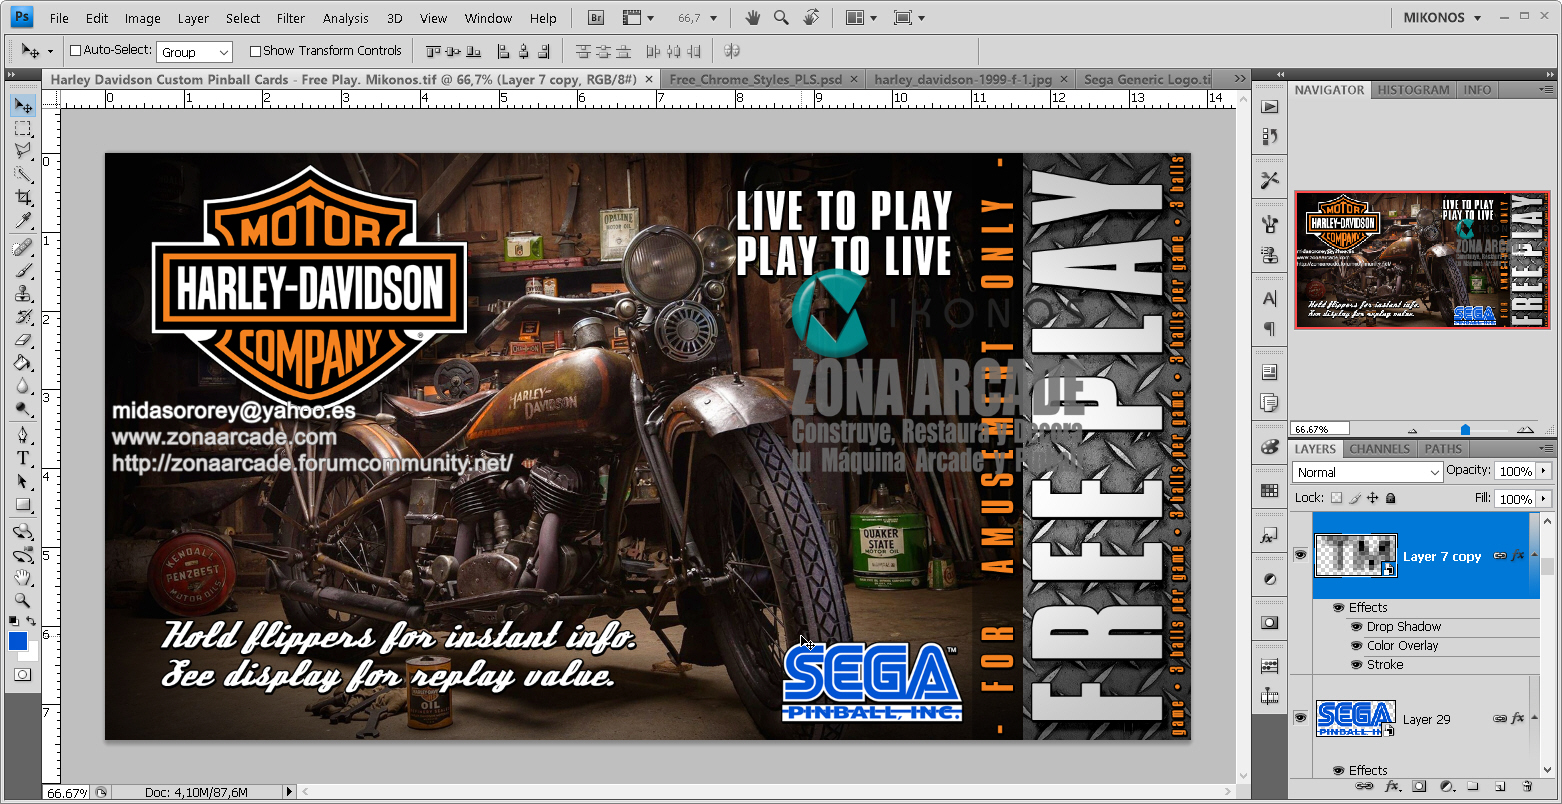 Harley Davidson Custom Pinball Card - Free Play. Mikonos1